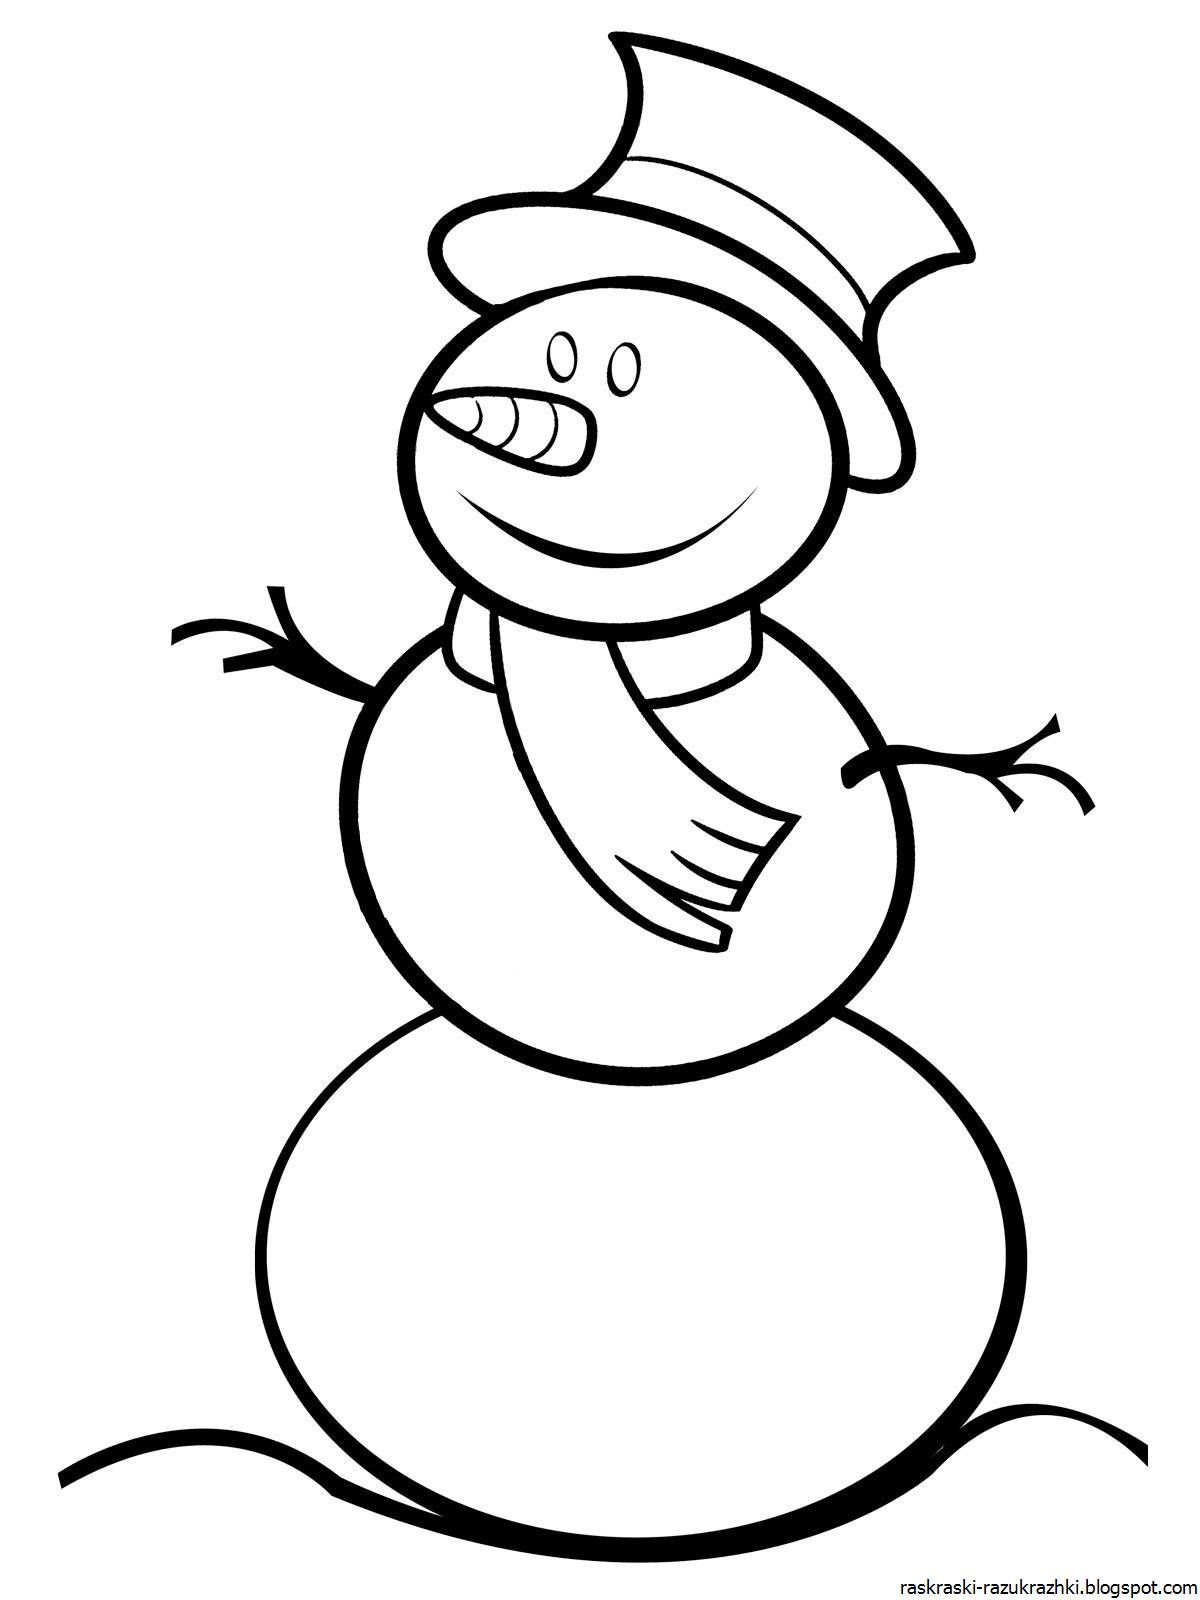 Snowman for kids #6